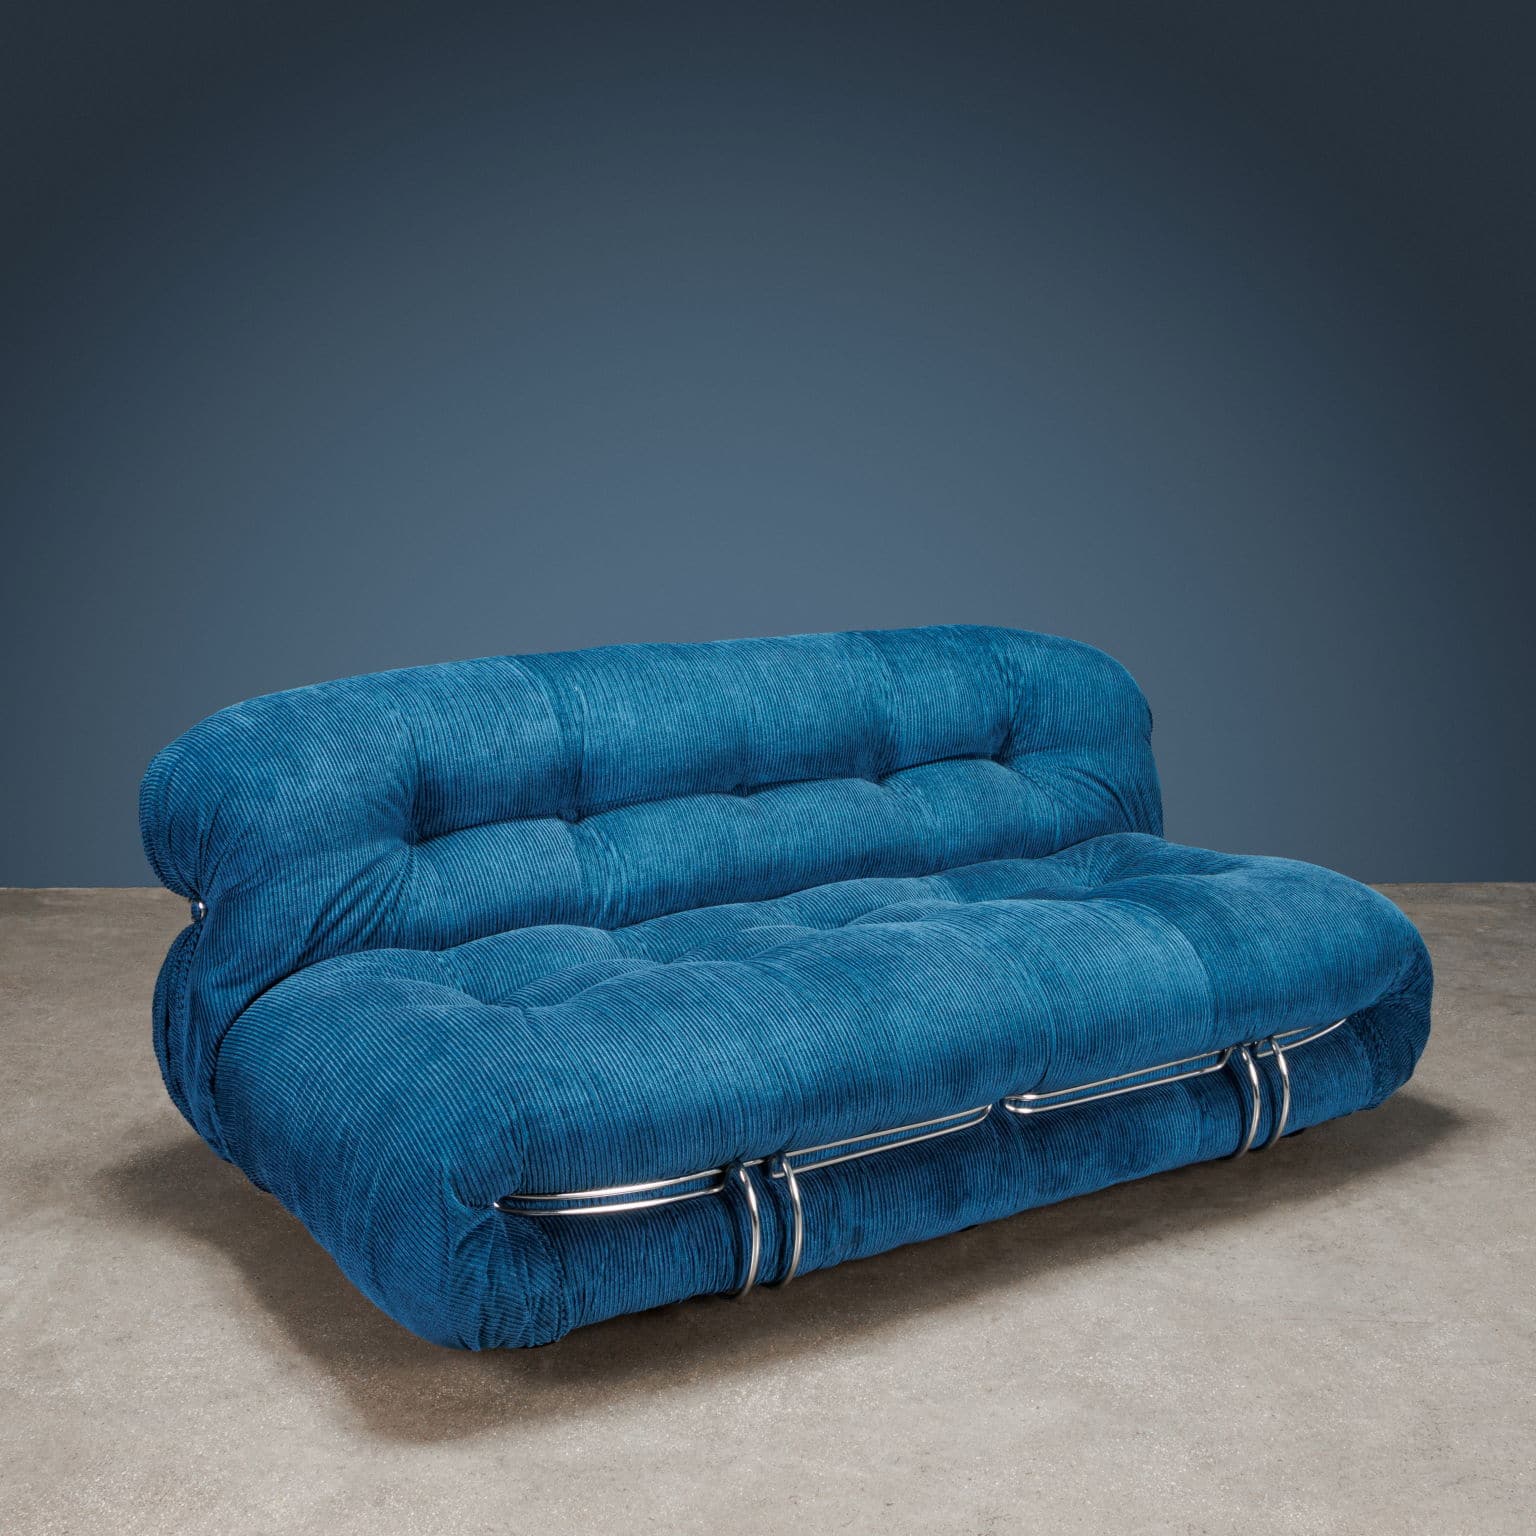 Two-seater sofa ‘Soriana’, Afra & Tobia Scarpa for Cassina